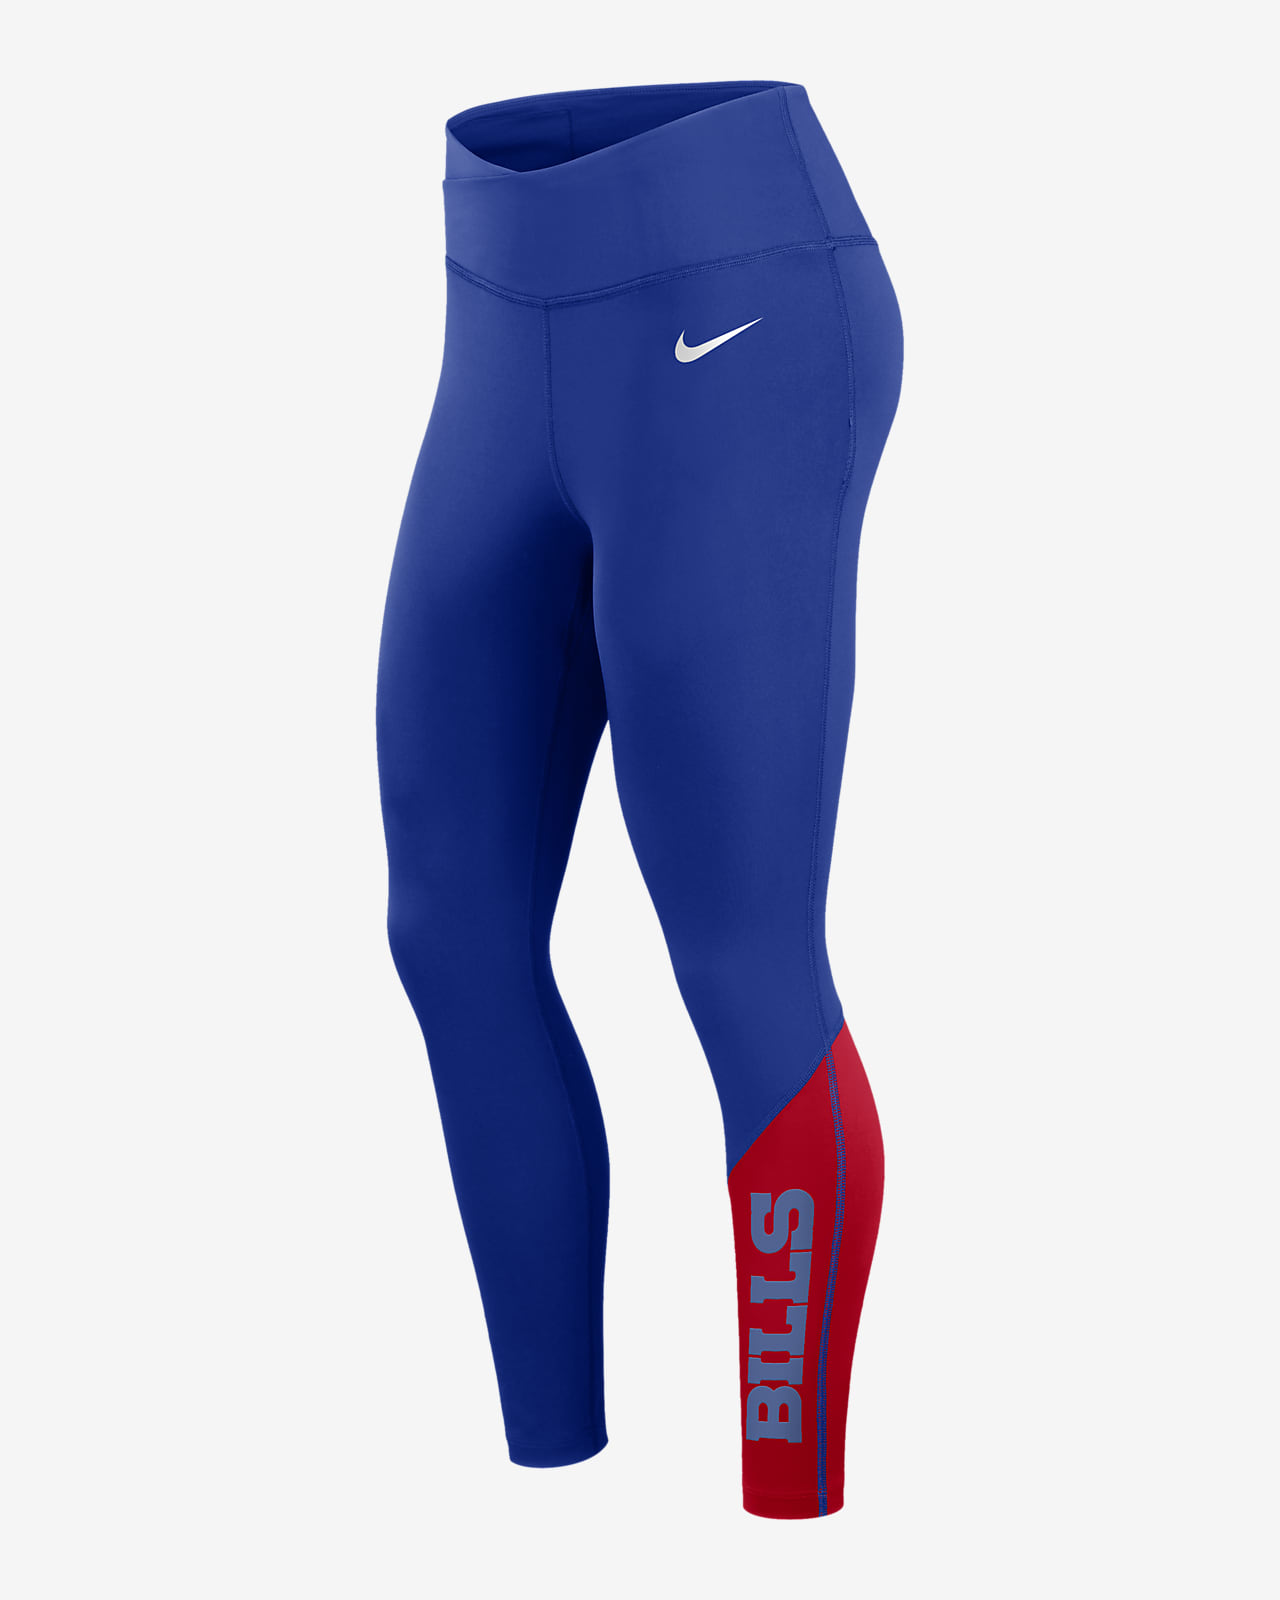 Nike Dri-FIT (NFL Buffalo Bills) Women's 7/8 Leggings